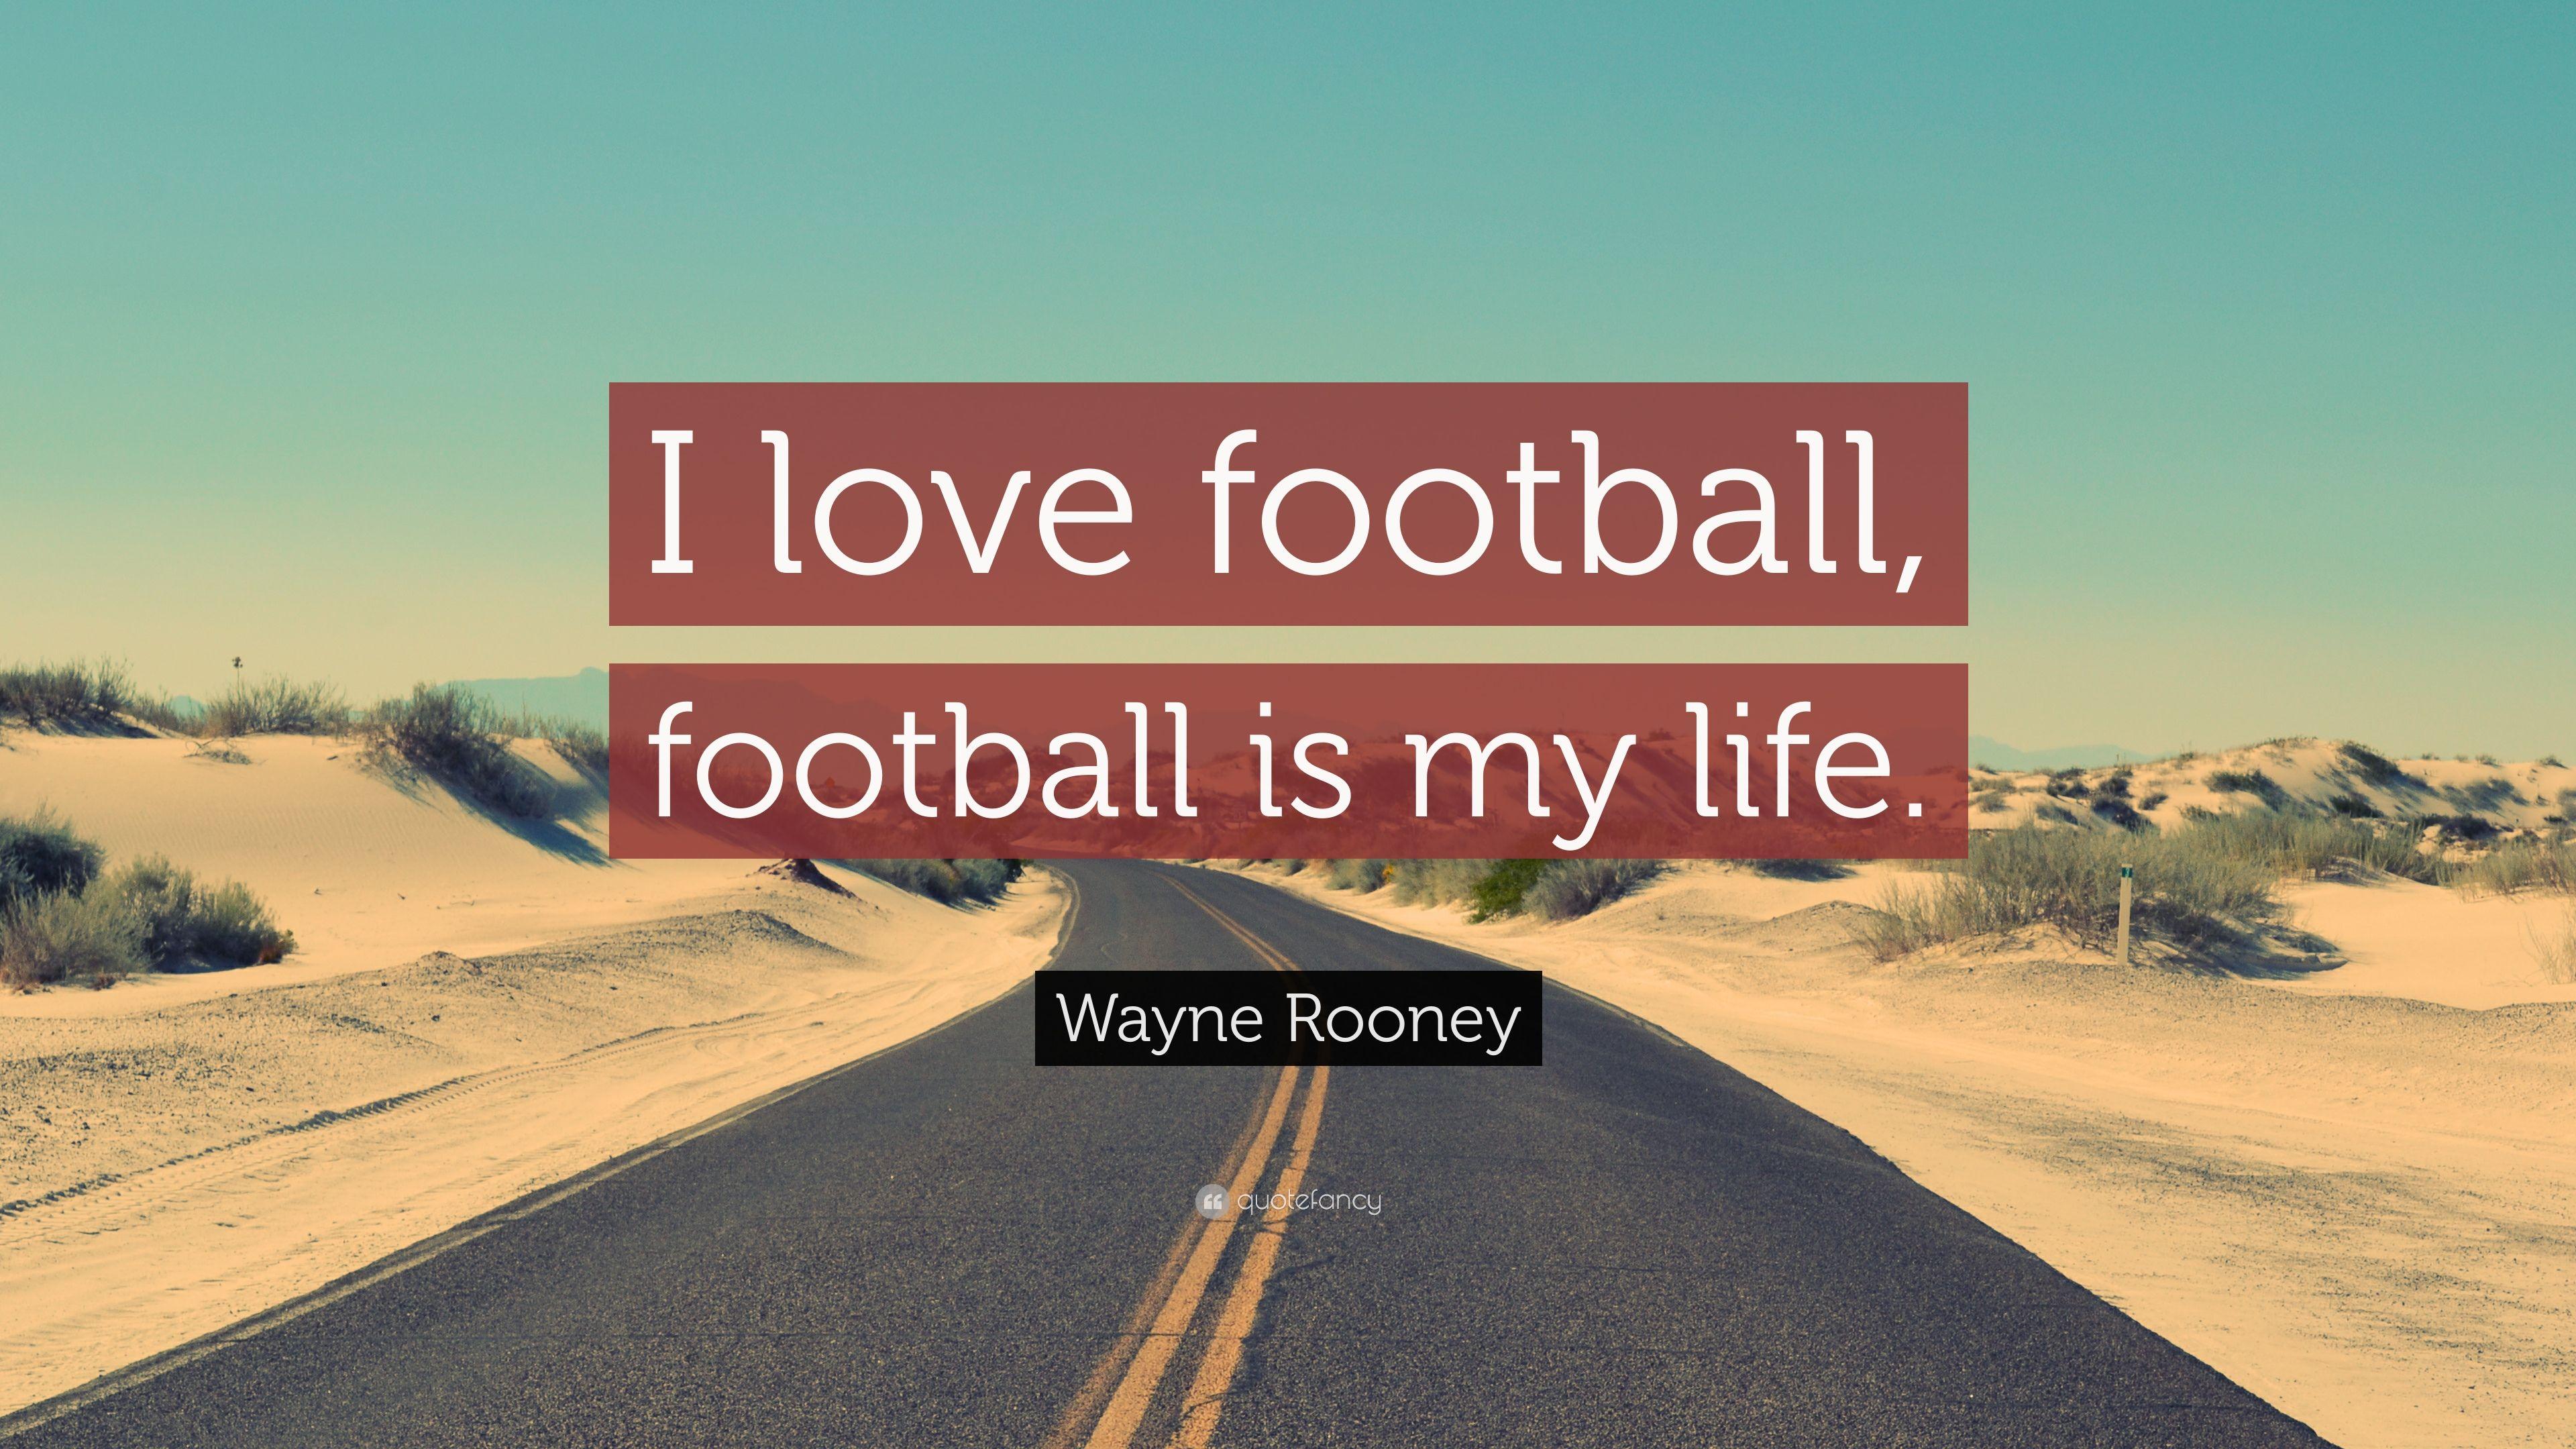 Wayne Rooney Quote: “I love football, football is my life.” 10